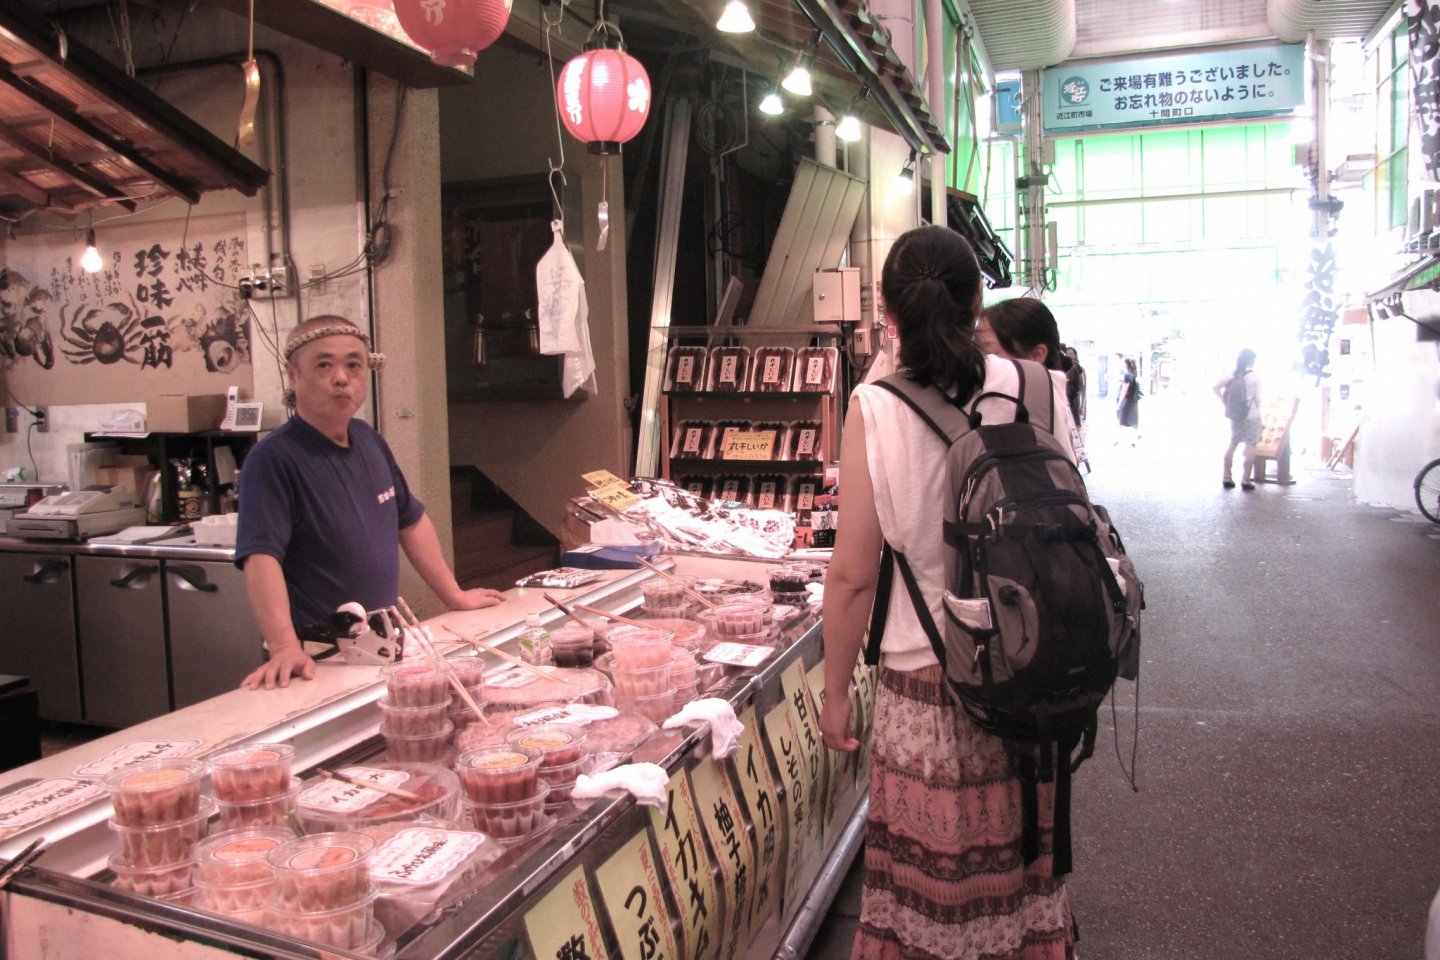 Visitors explore the Omi-cho market